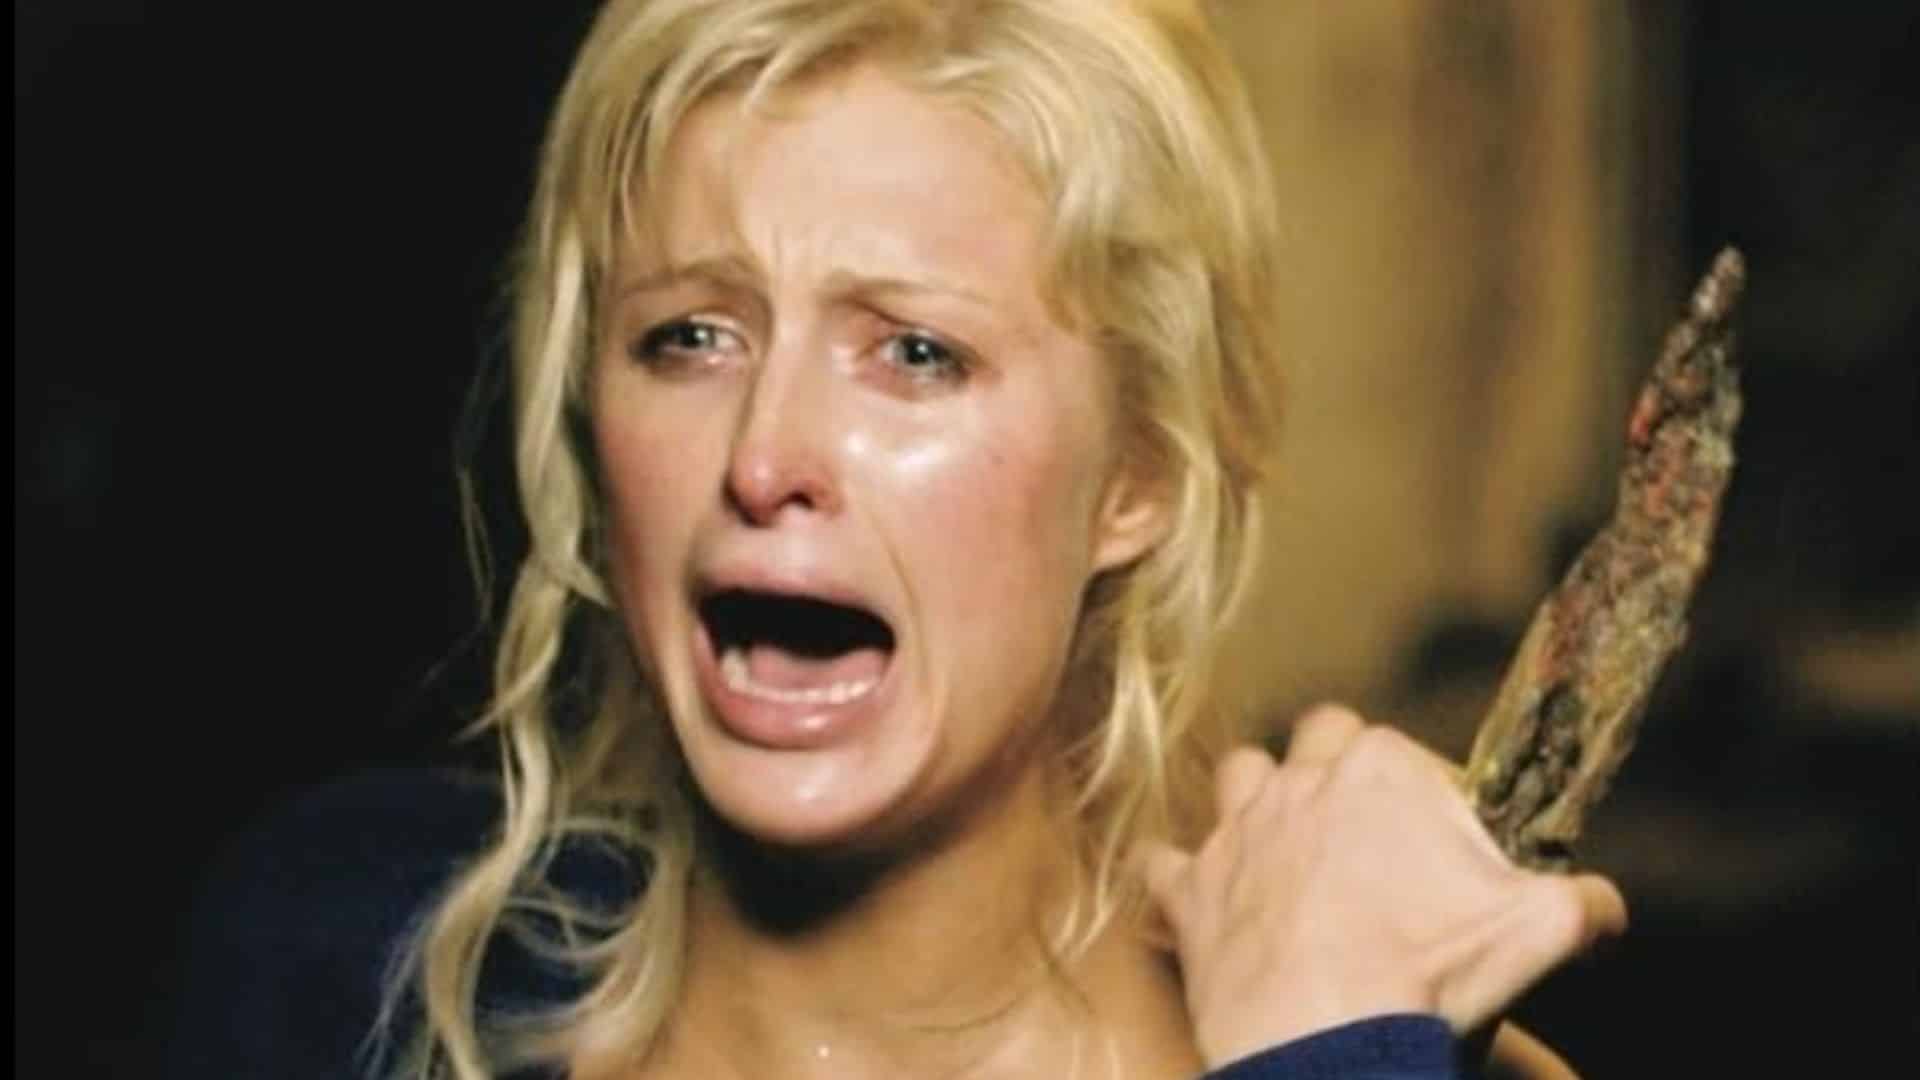 Paris Hilton screams in this image from Dark Castle Entertainment.